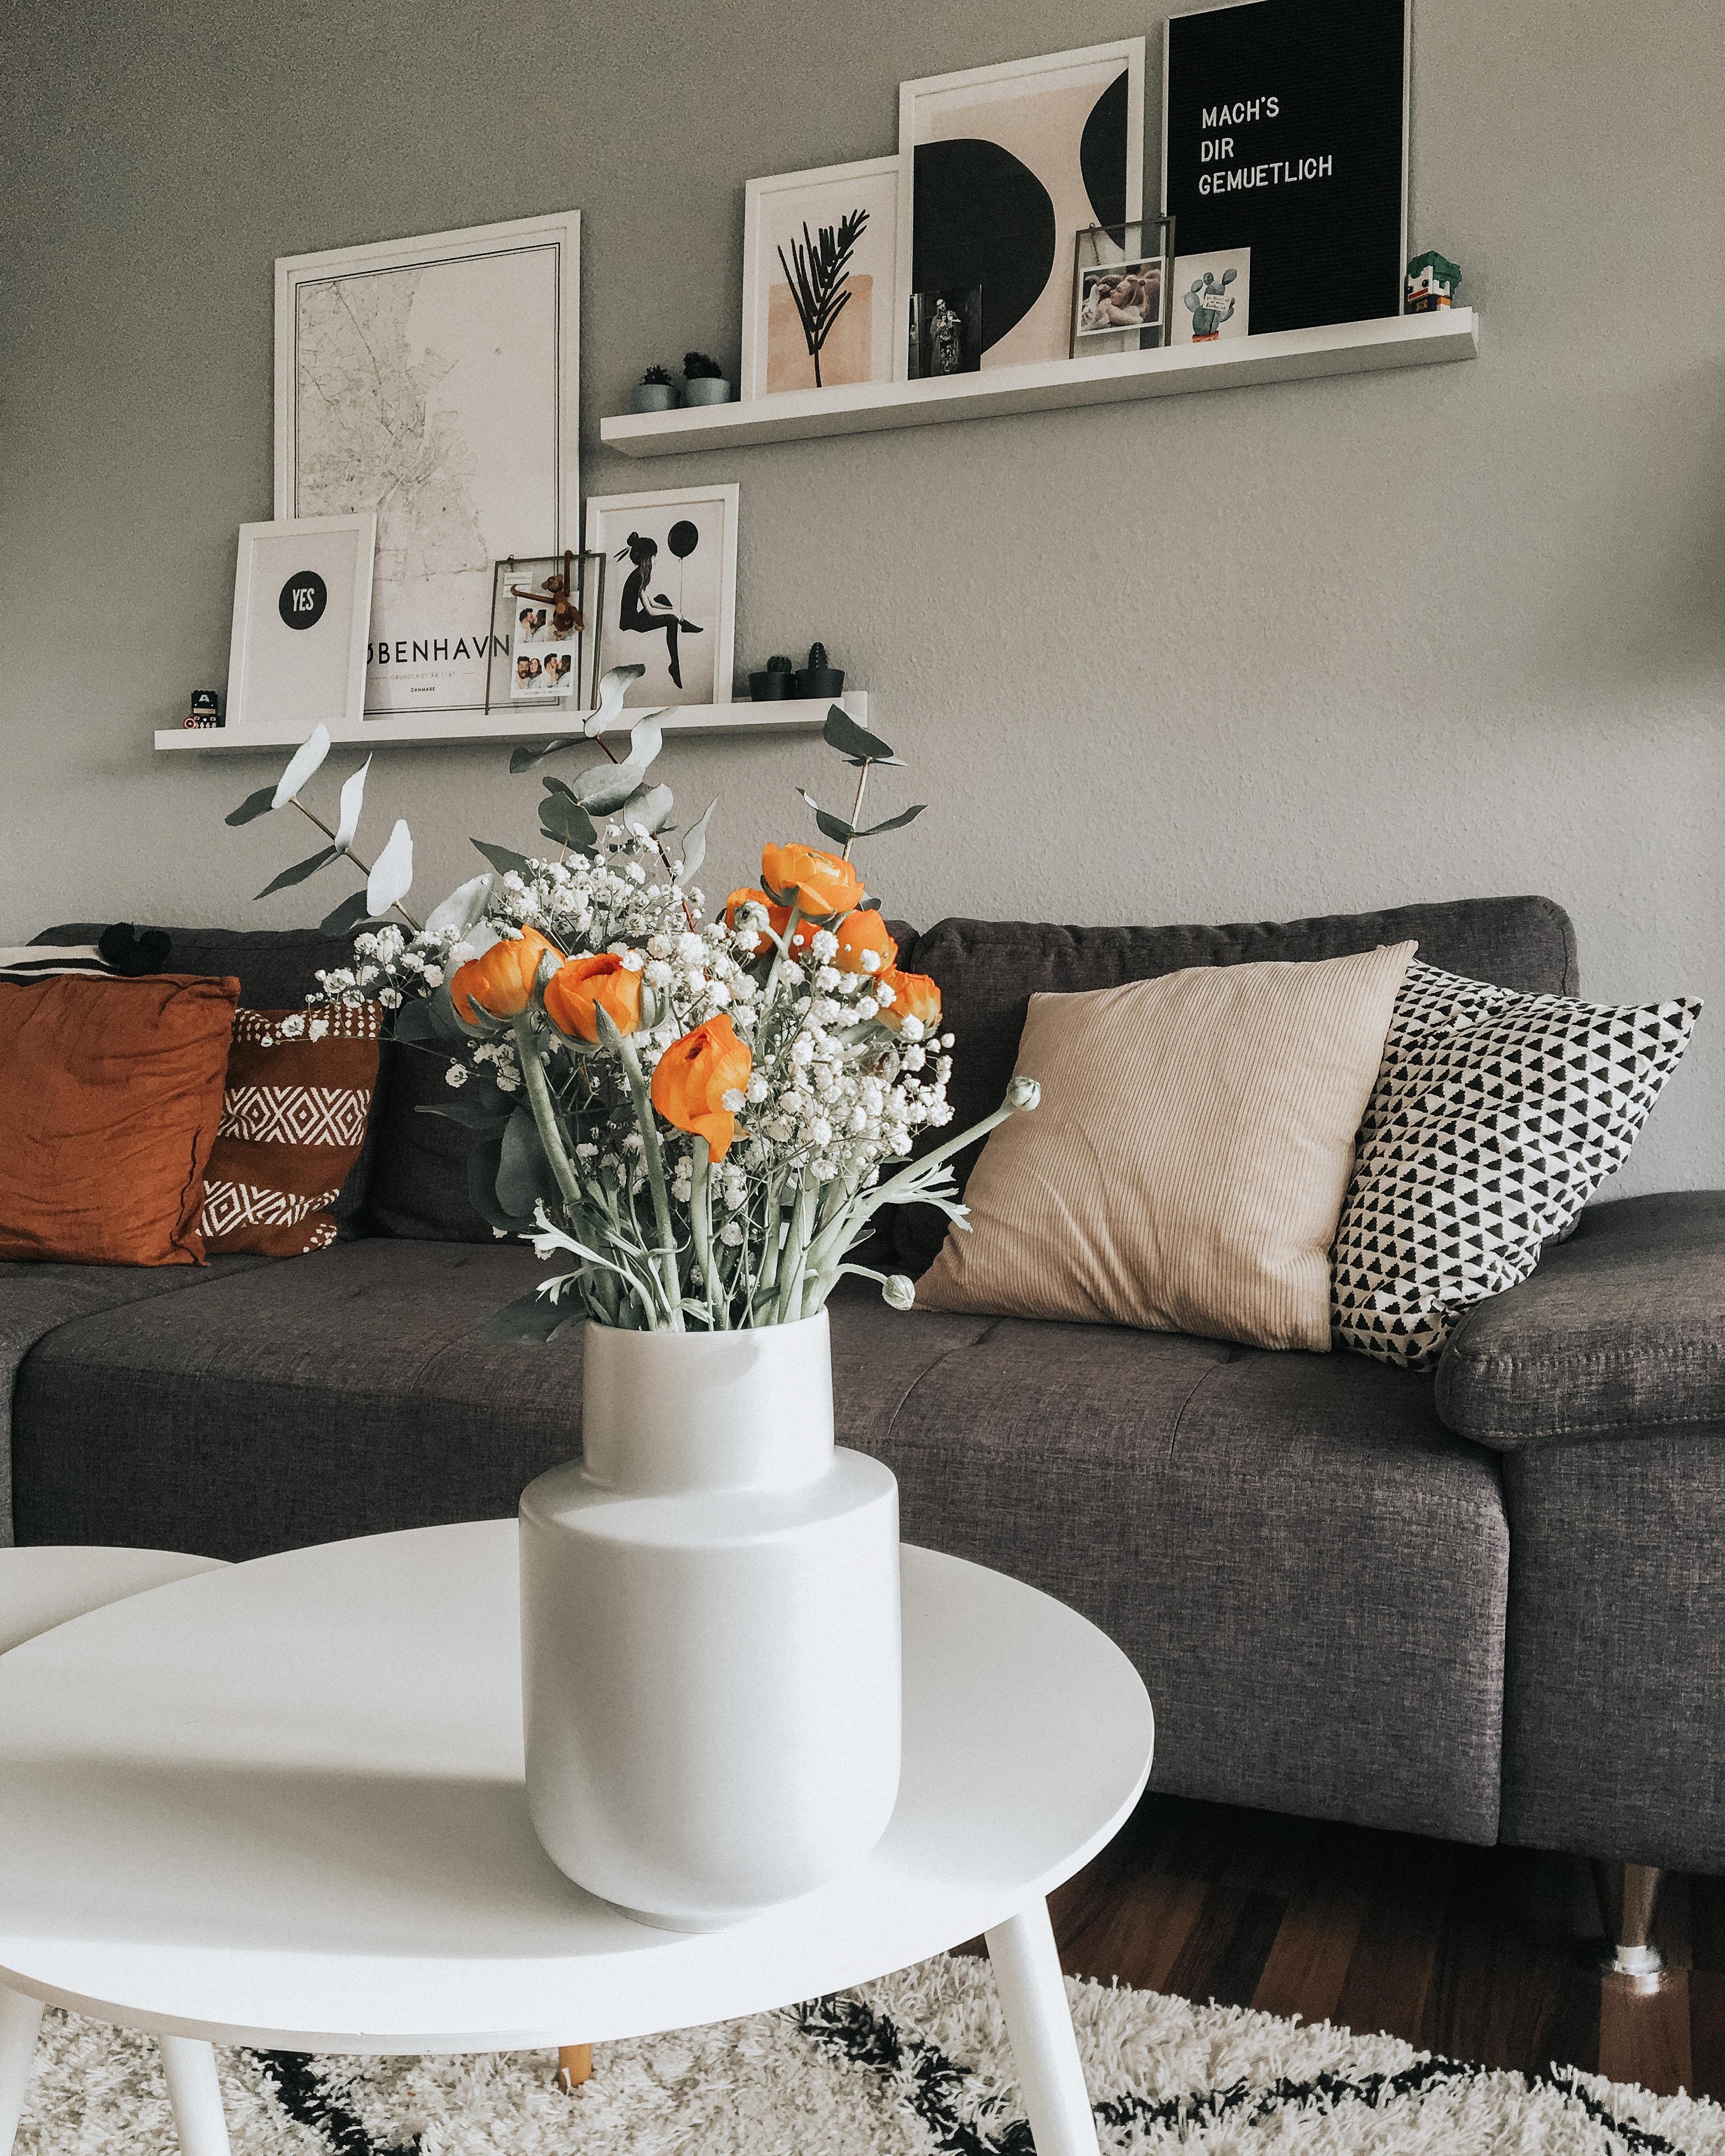 Hier gibt’s heut nur noch Couch & Netflix 🧡
#home #homeinspo #livingroom #flowers #inspiration #hygge #couchliebt